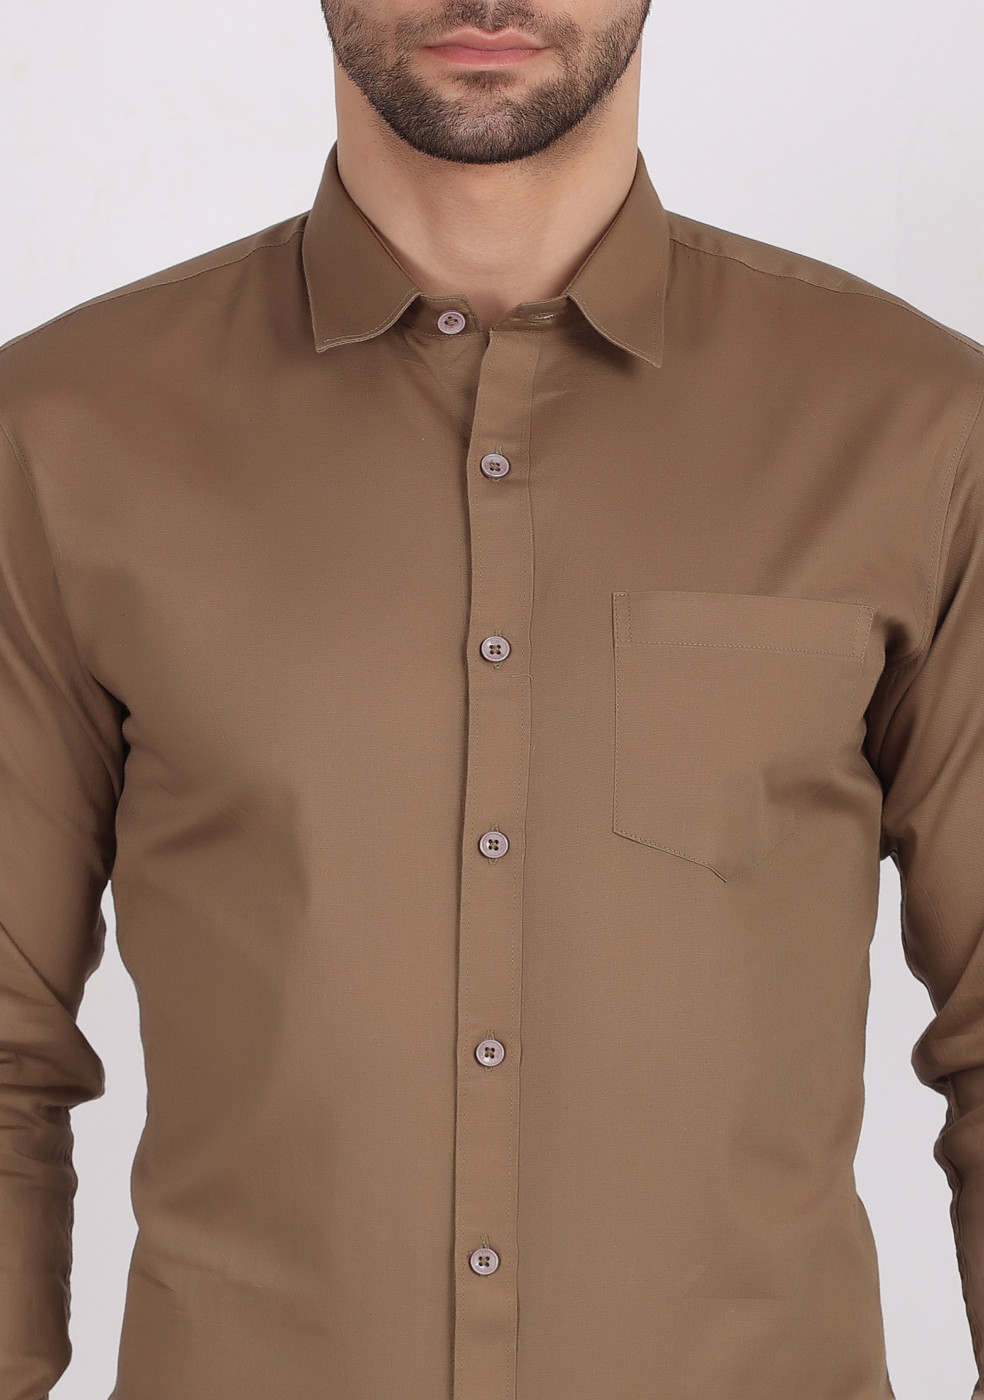 ASHTOM Khaki Plain Cotton Shirt For Men